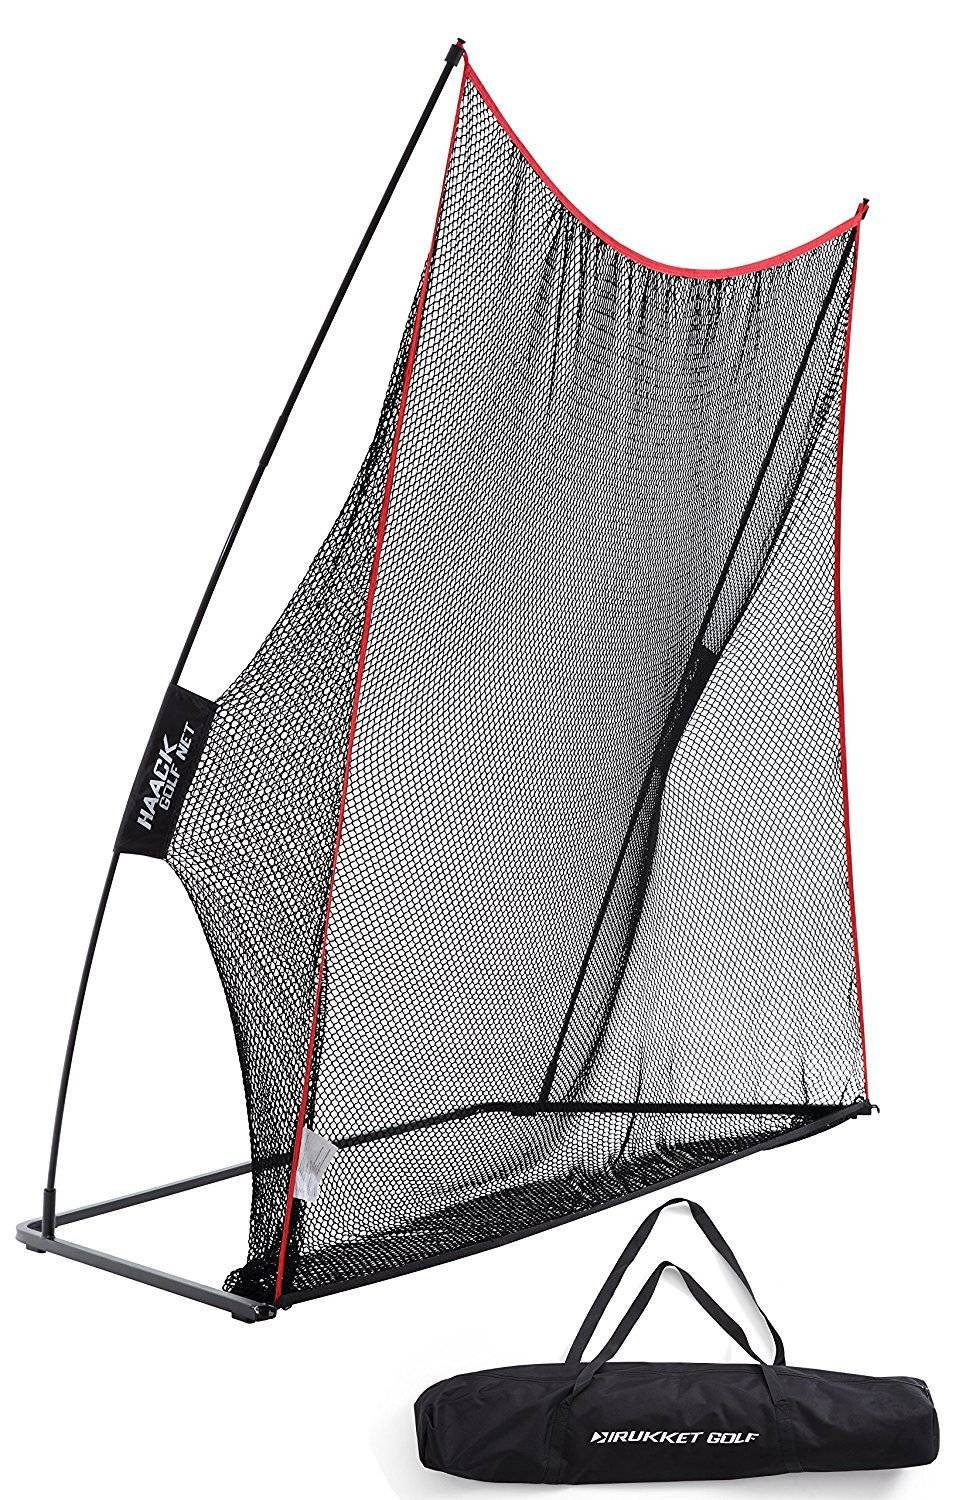 Portable golf net